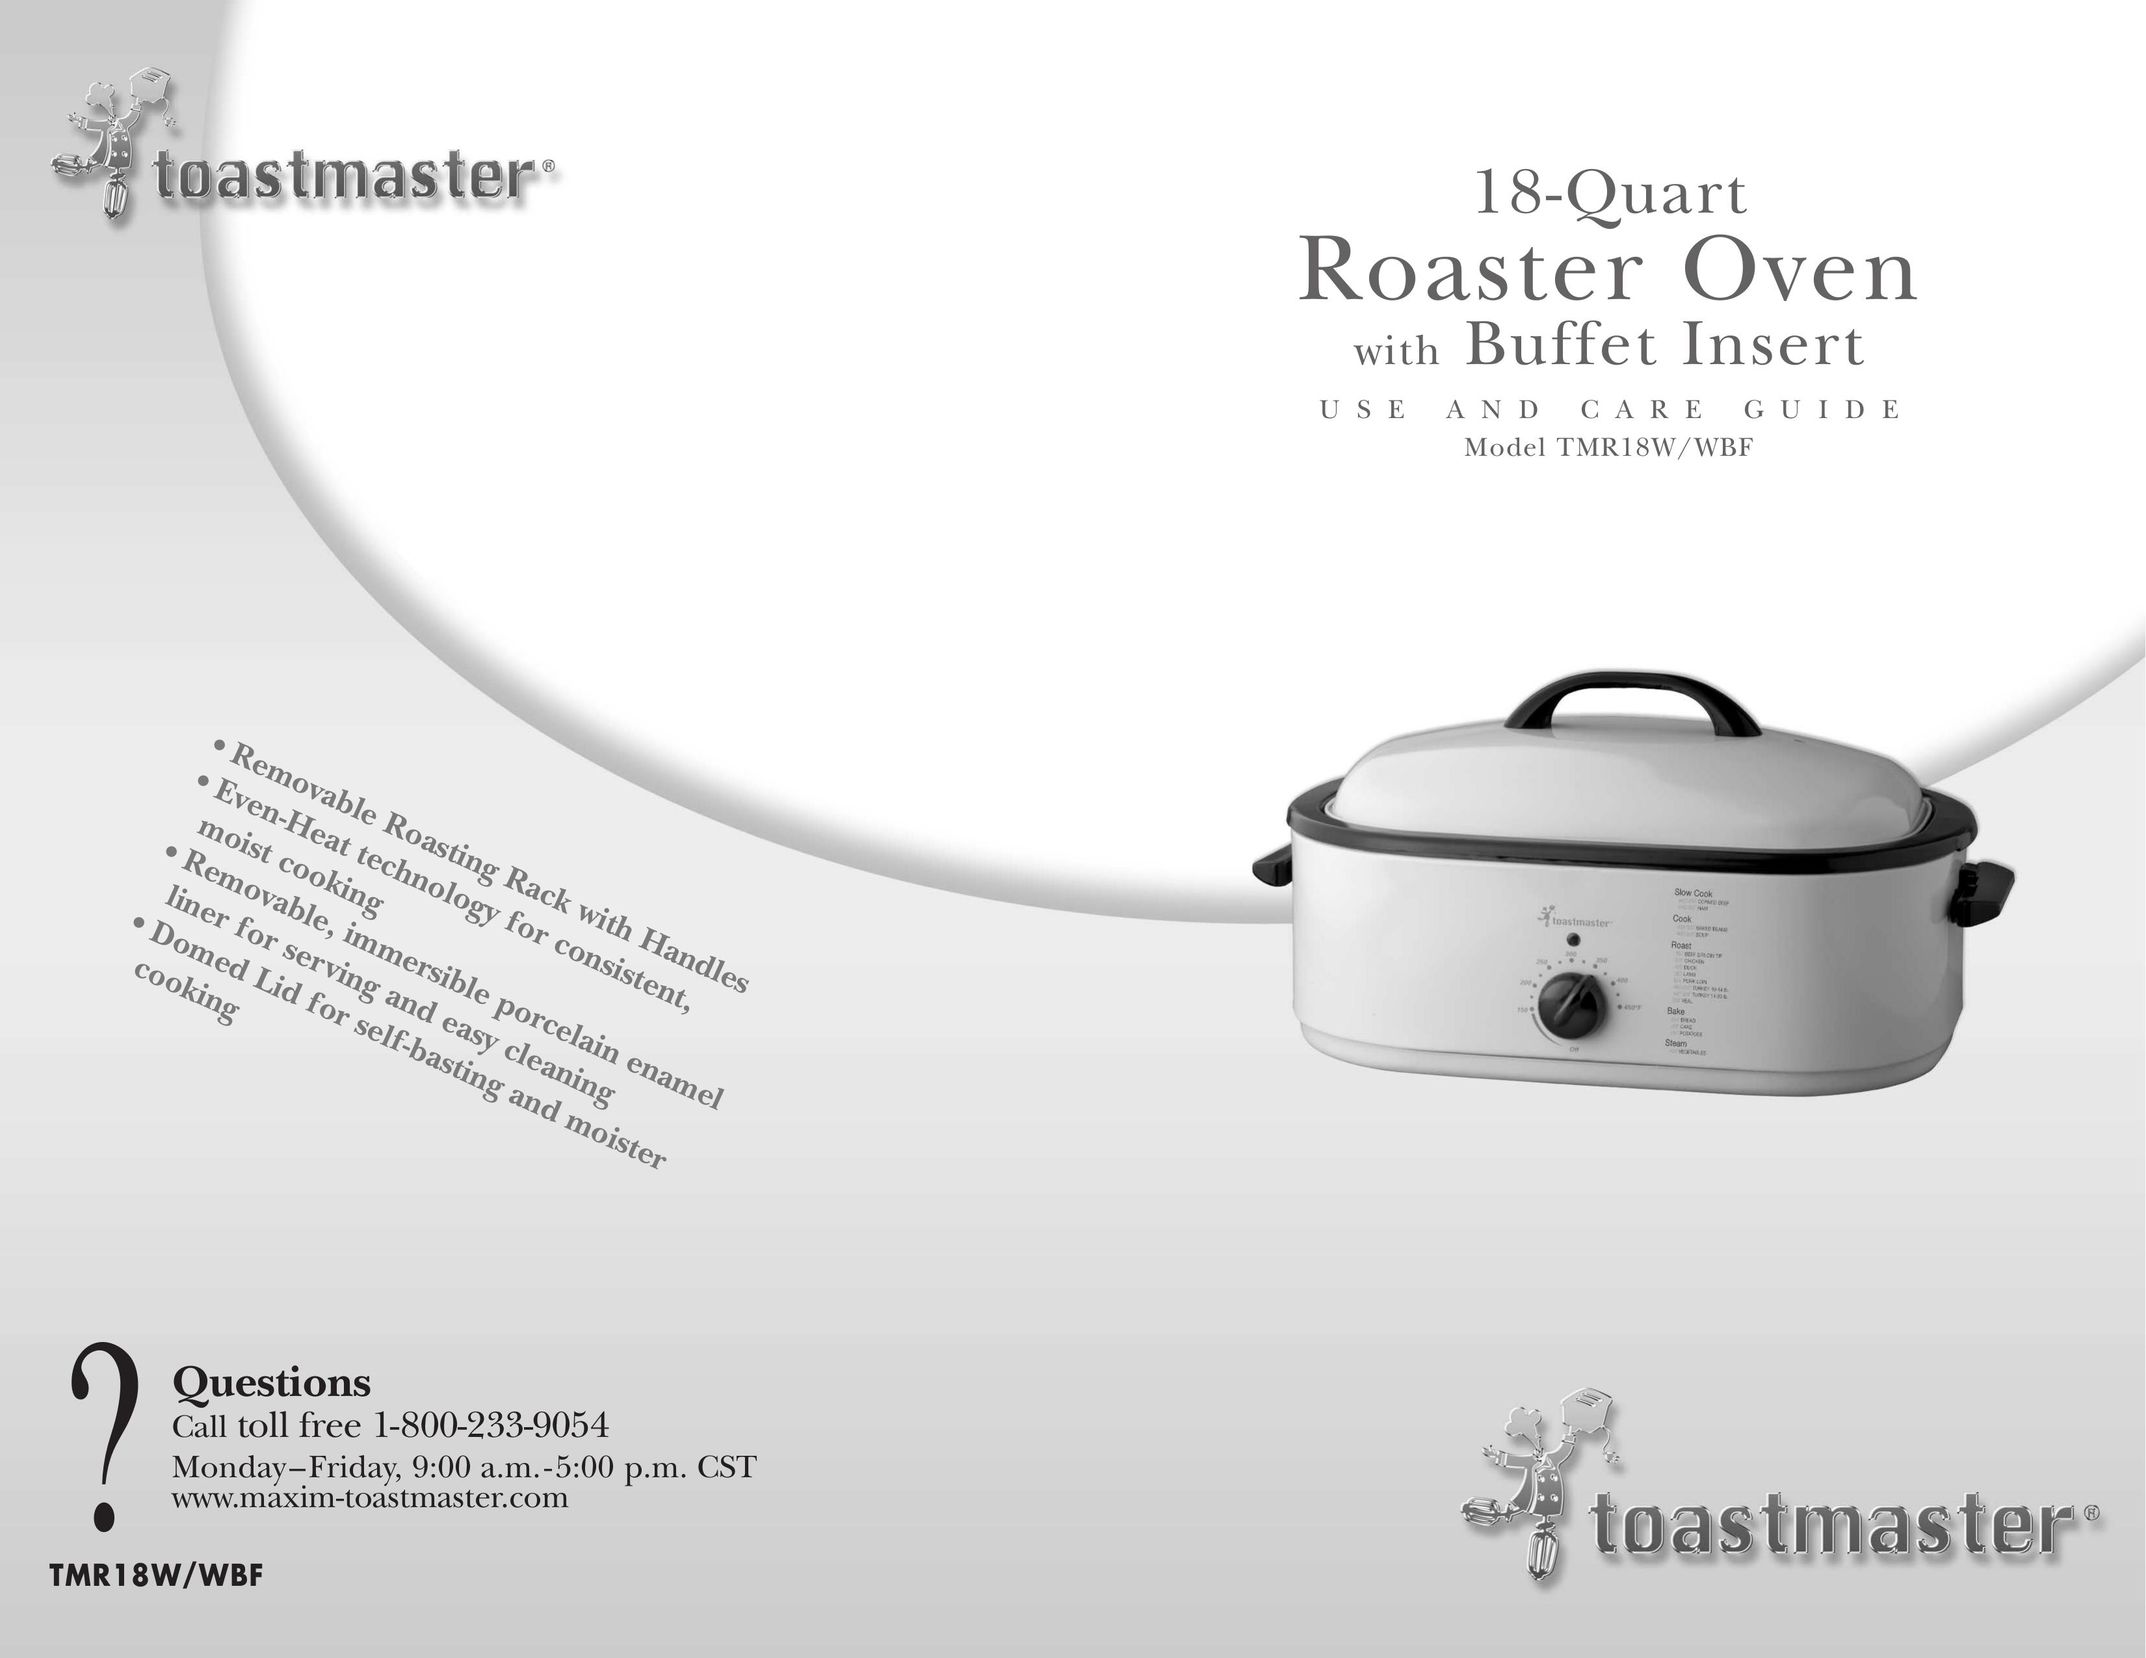 Toastmaster TMR18W/WBF Oven User Manual